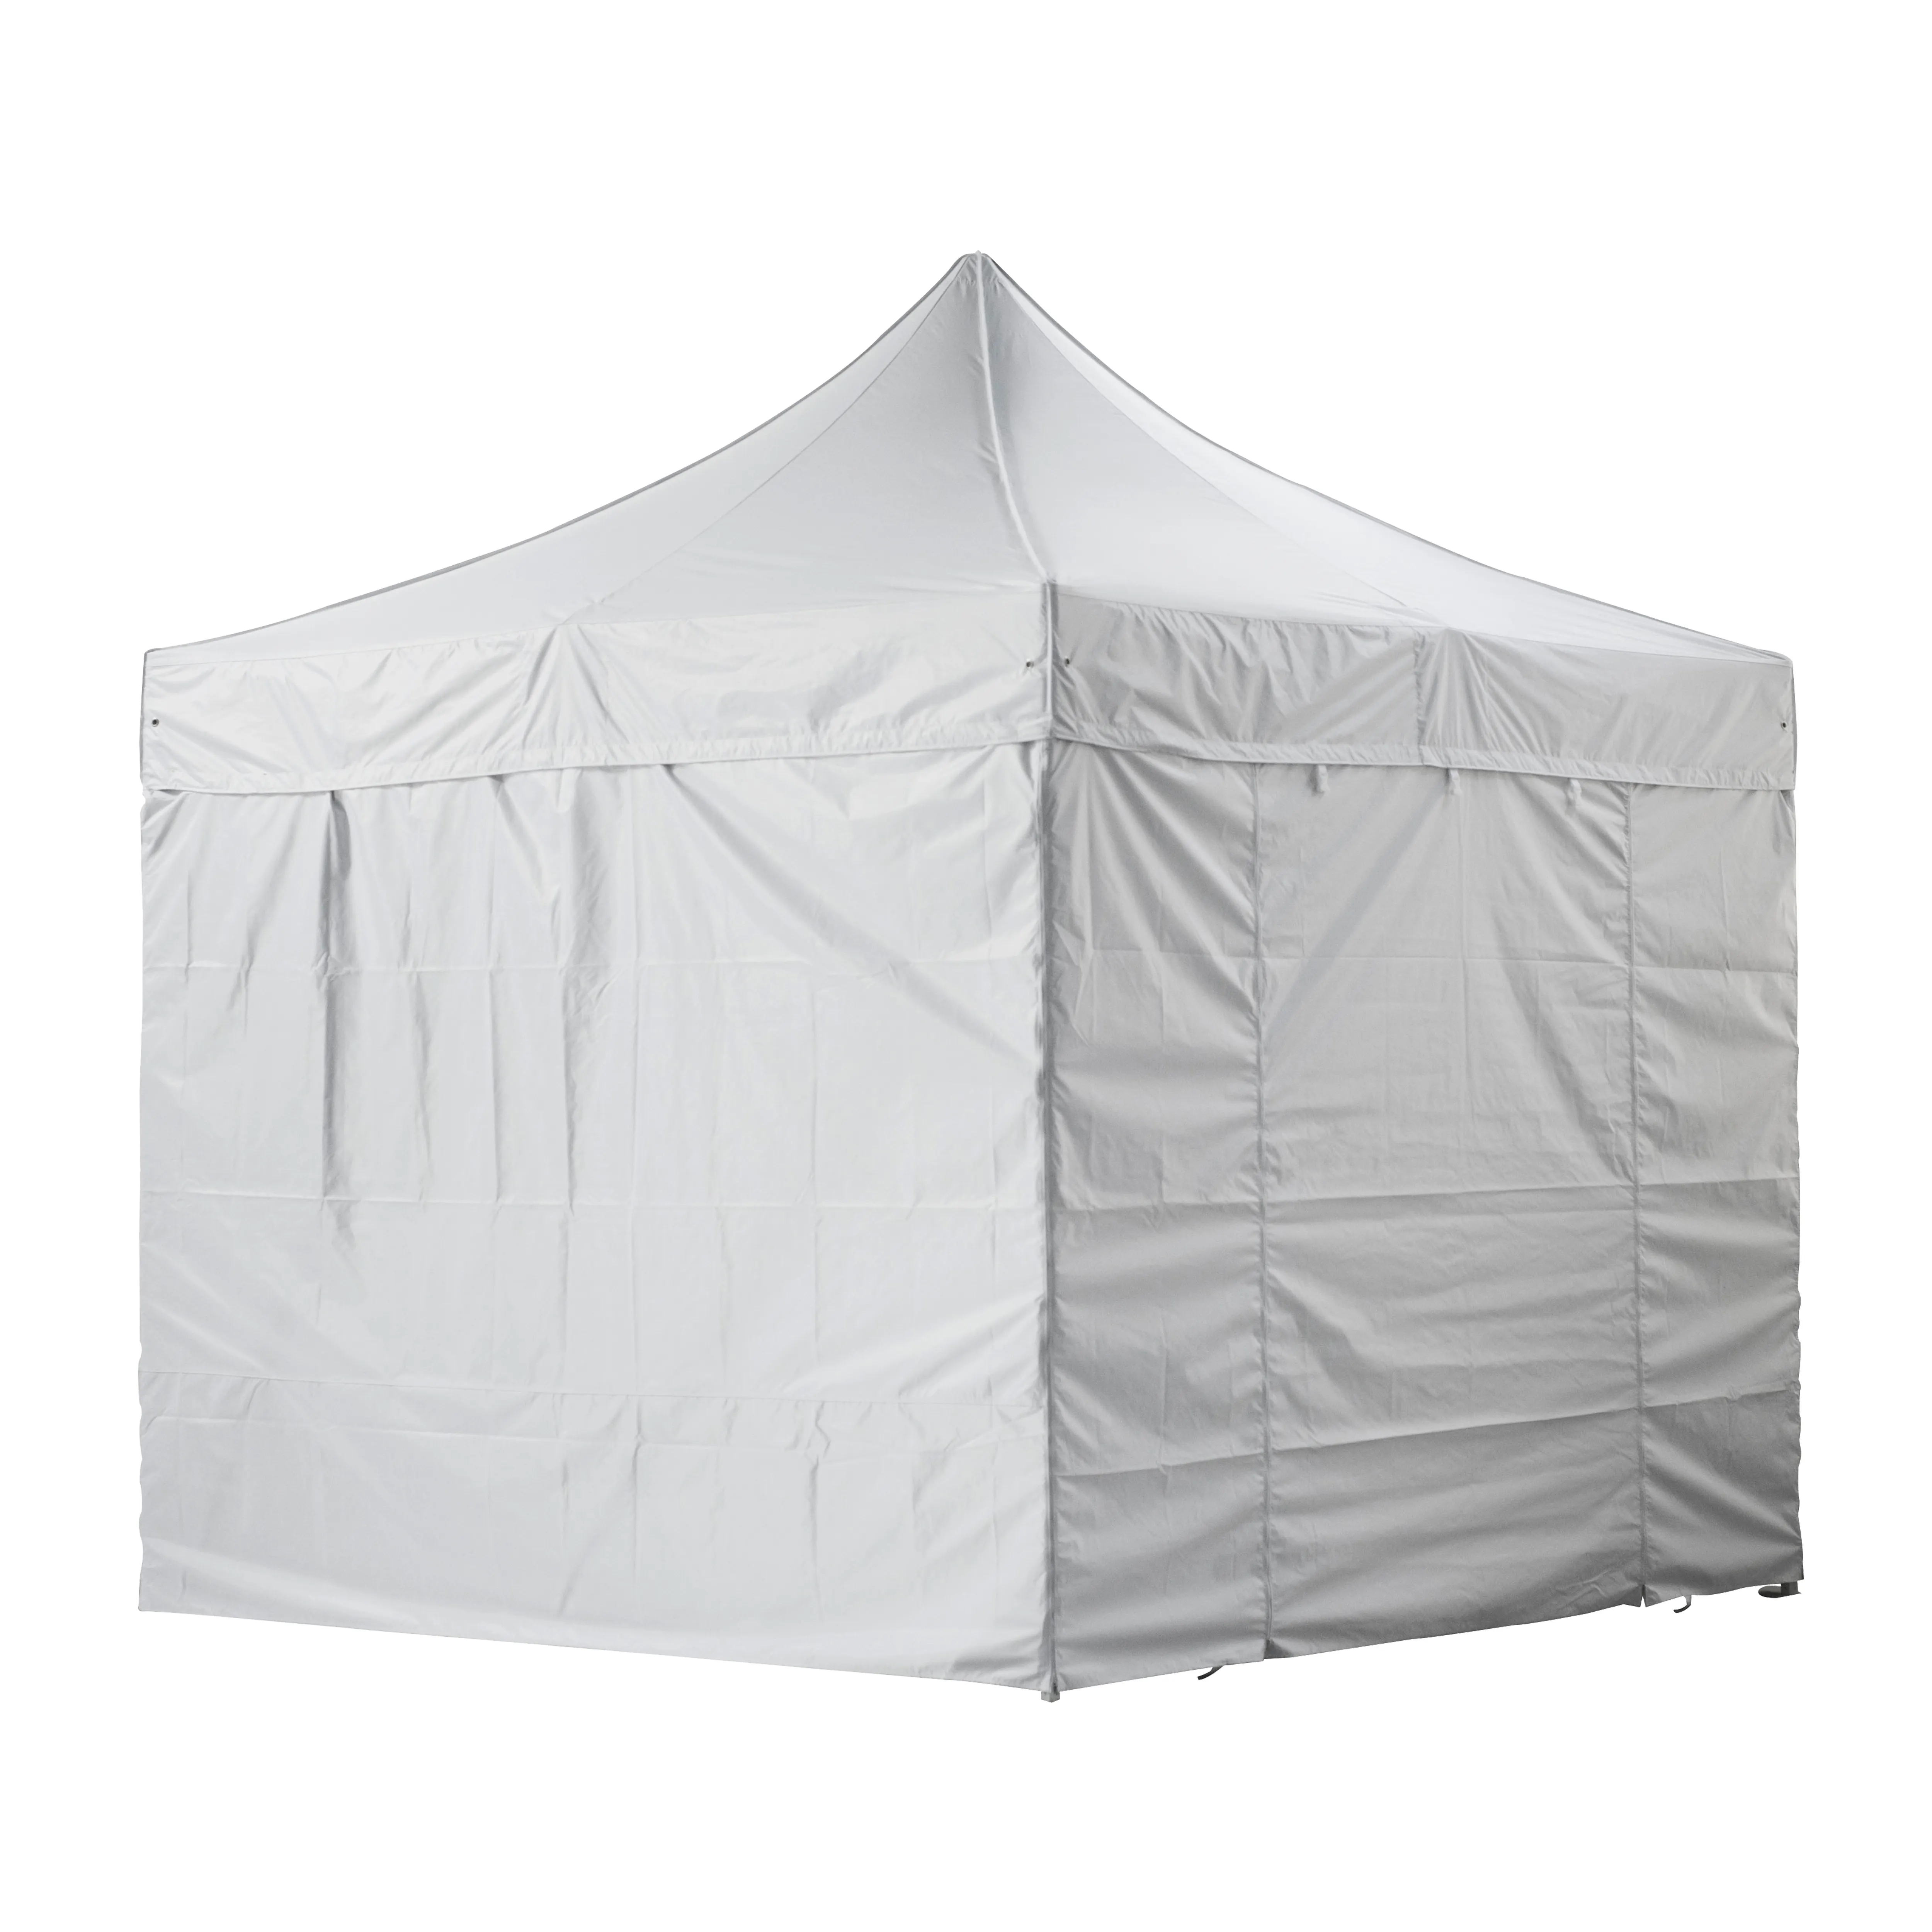 3x3M Awning Rainproof Canopy Garden Shade Shelter Shade Tent Heavy Duty Pop Up Gazebo Canopy Tent